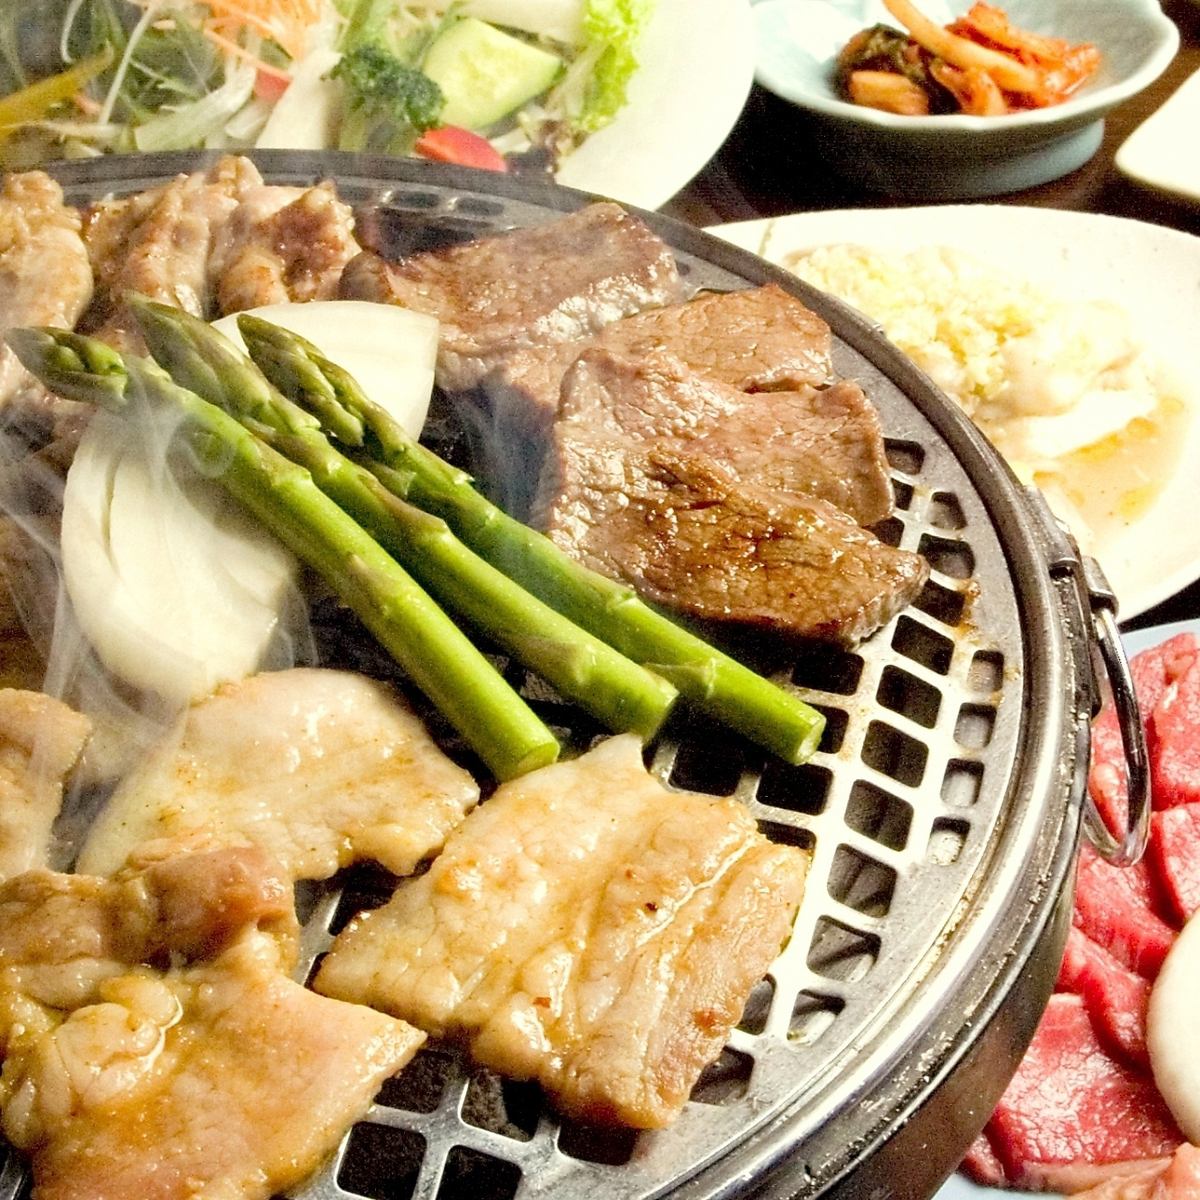 All-you-can-eat and drink yakiniku, shabu-shabu, and sukiyaki made with Wagyu beef!